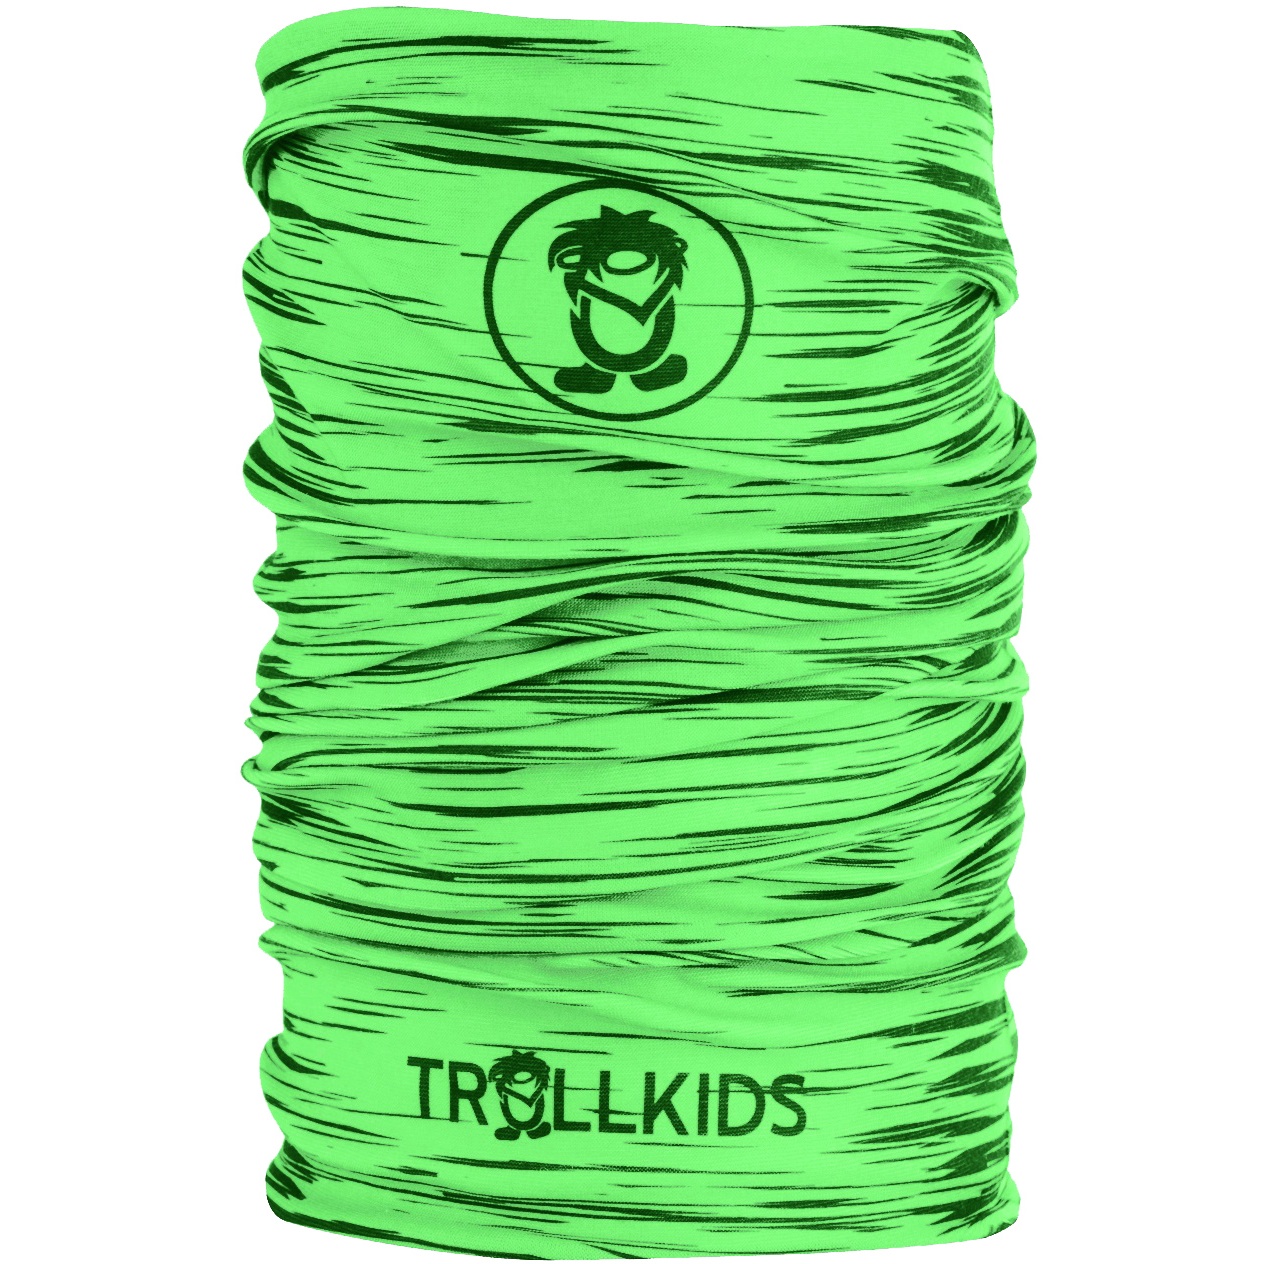 Productfoto van Trollkids Troll Kids Multitube - Dark Green/Light Green